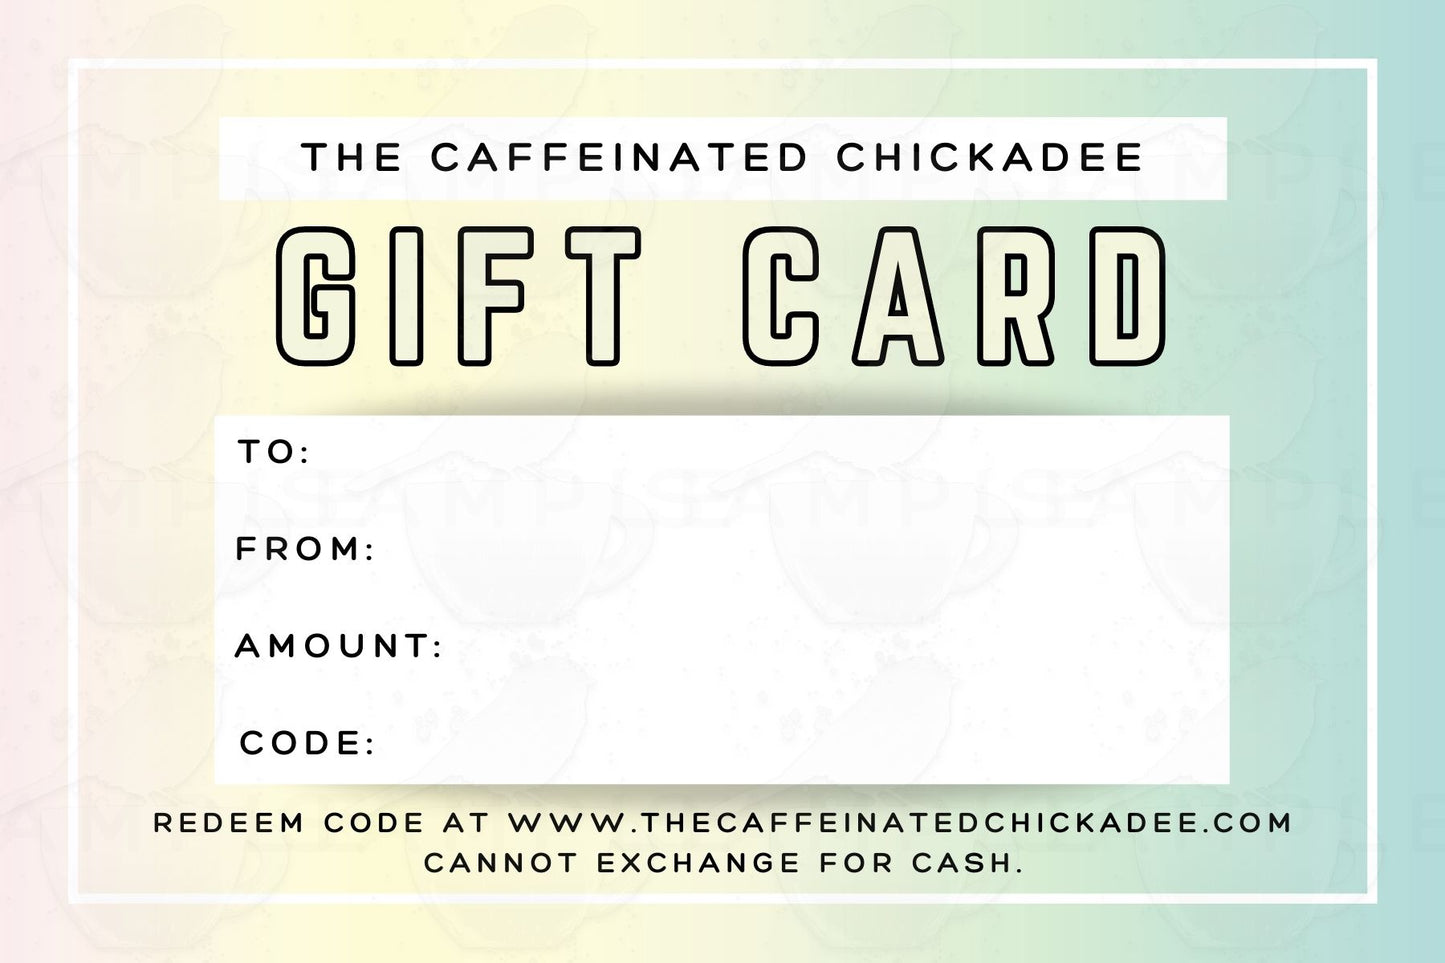 The Caffeinated Chickadee Gift Card